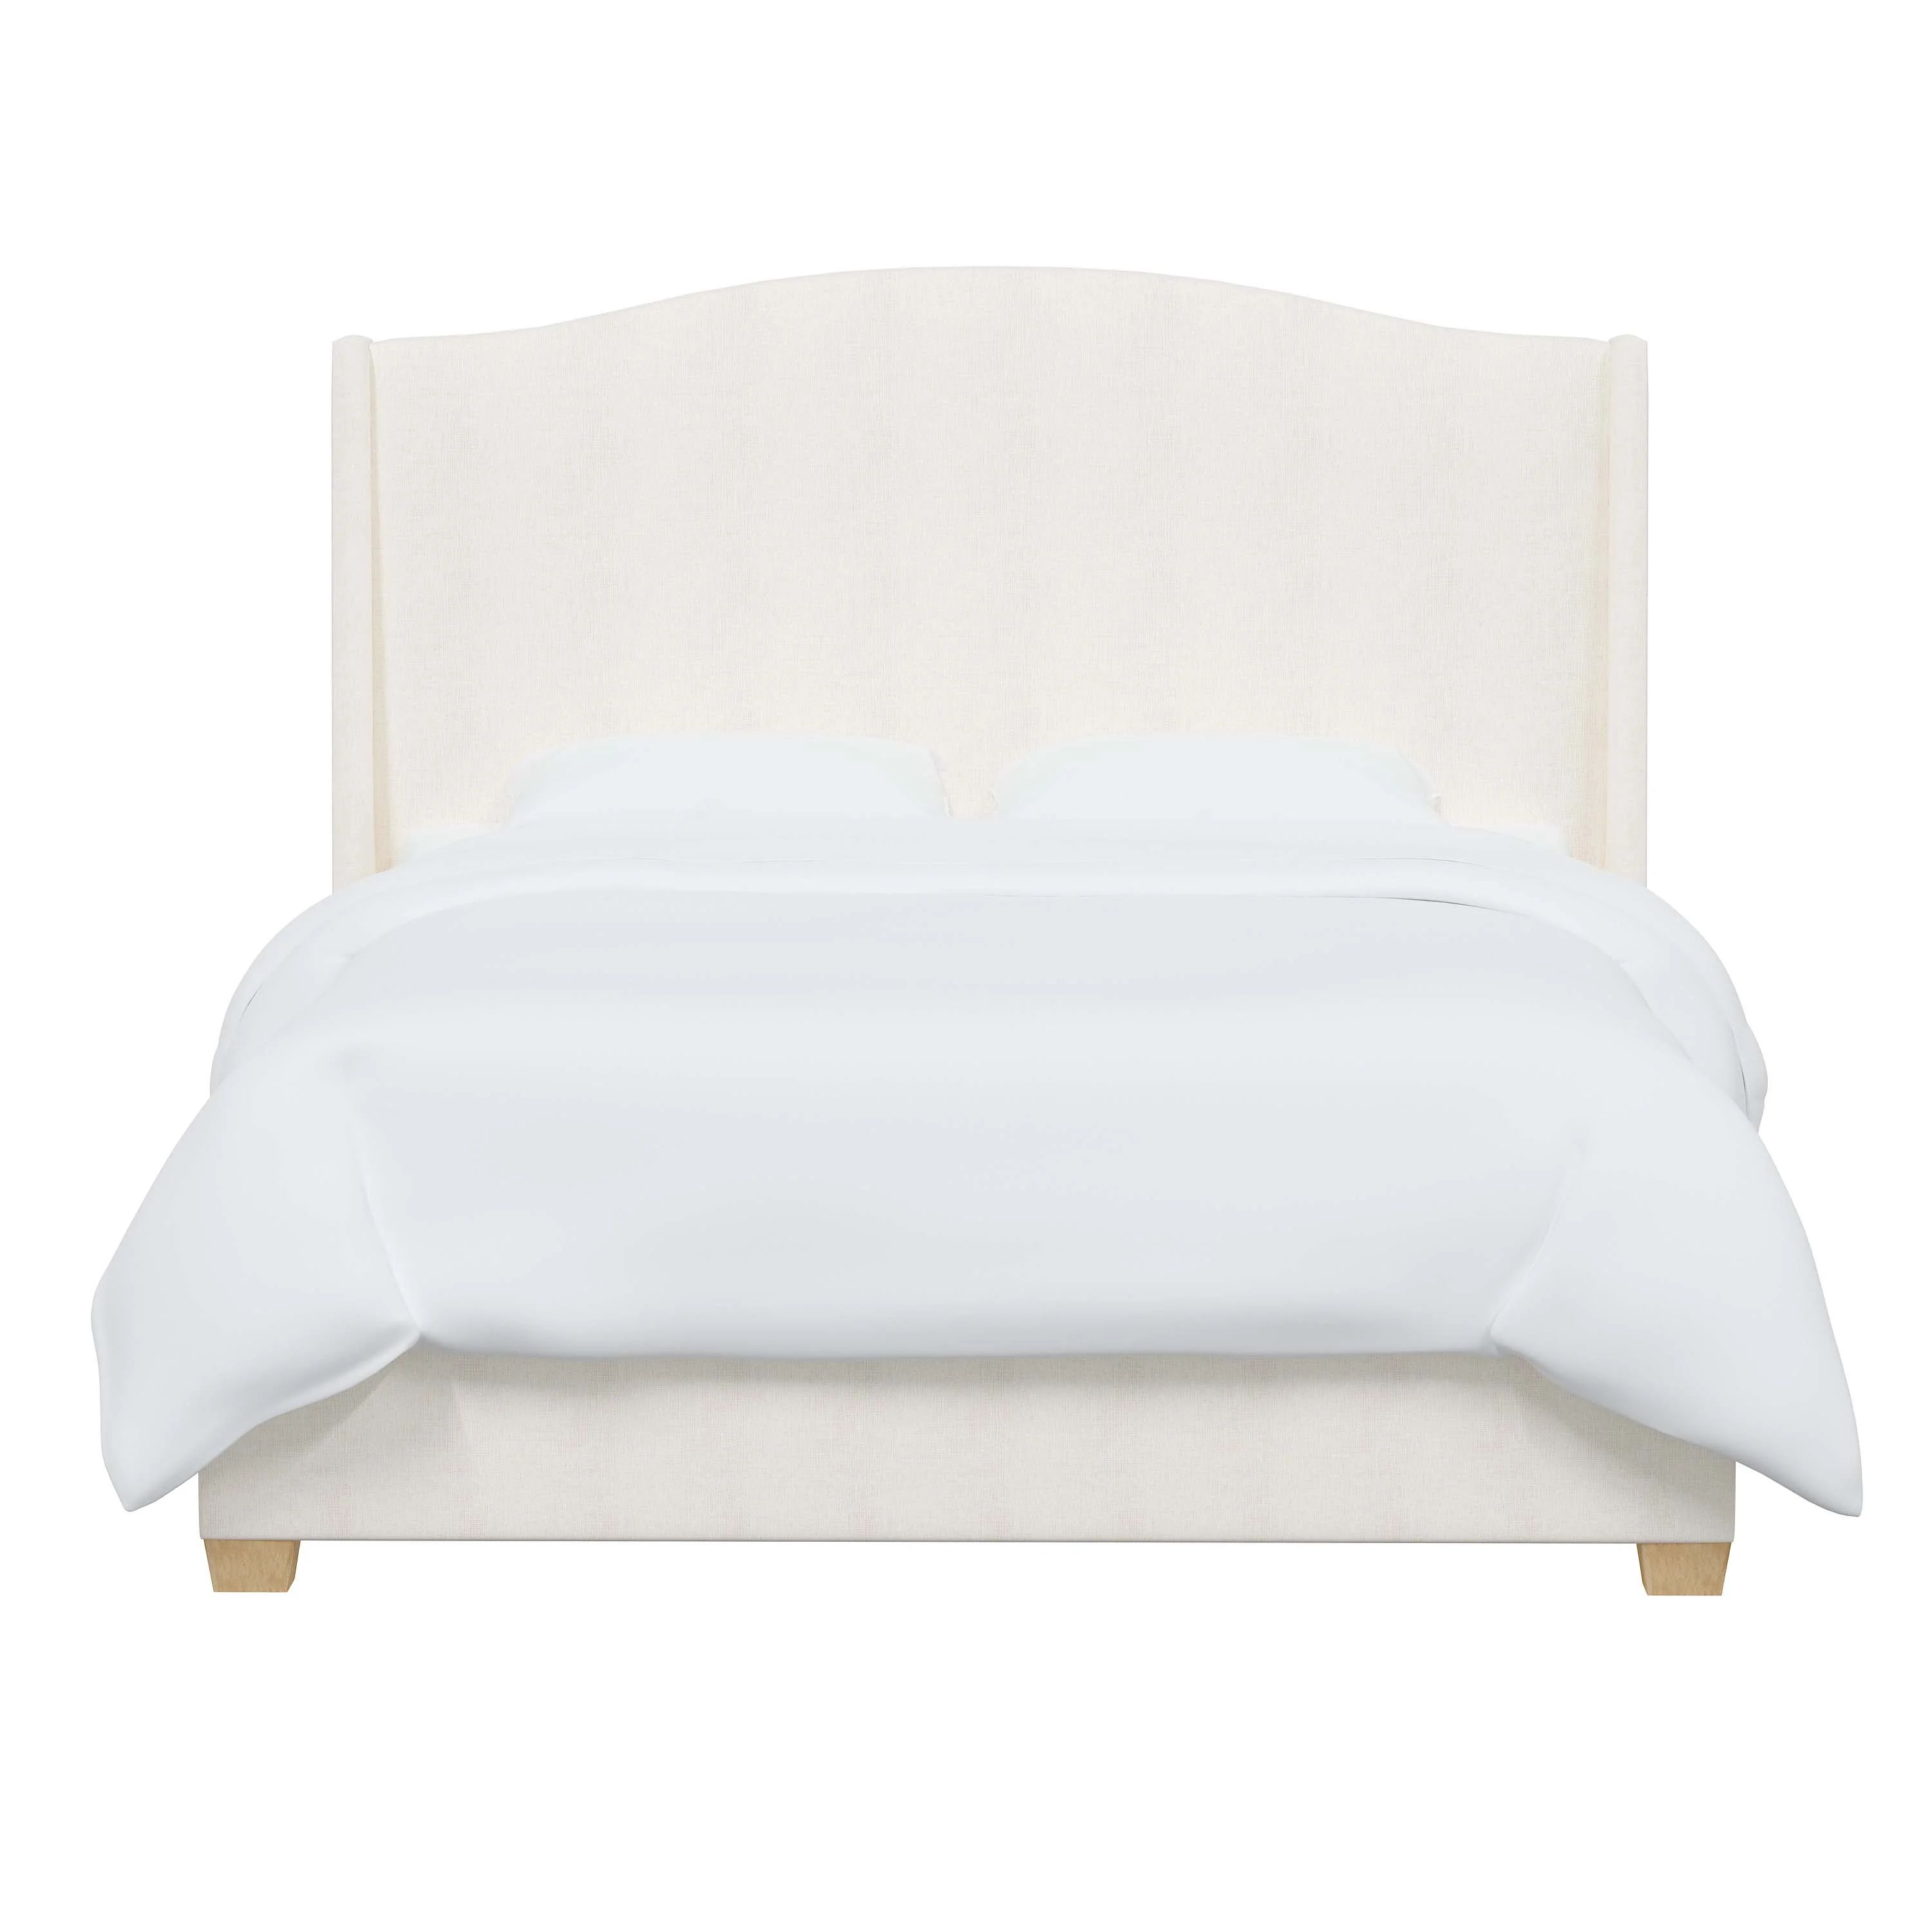 Amerson Upholstered Low Profile Platform Bed | Wayfair Professional